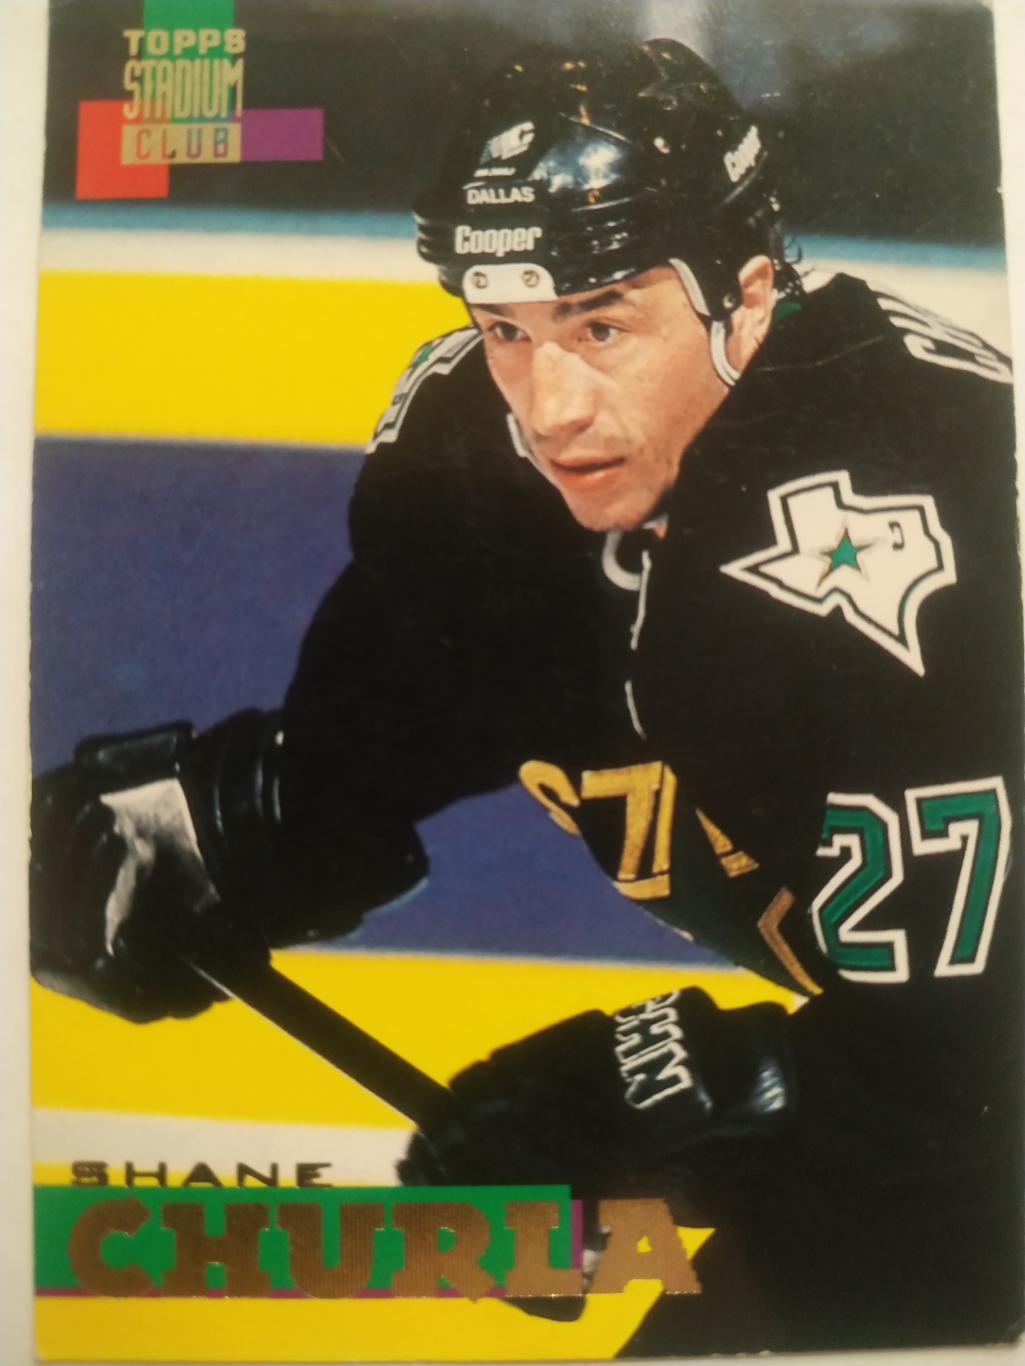 ХОККЕЙ КАРТОЧКА НХЛ TOPPS STADIUM CLUB 1994-95 NHL SHANE CHURLA DALLAS #21